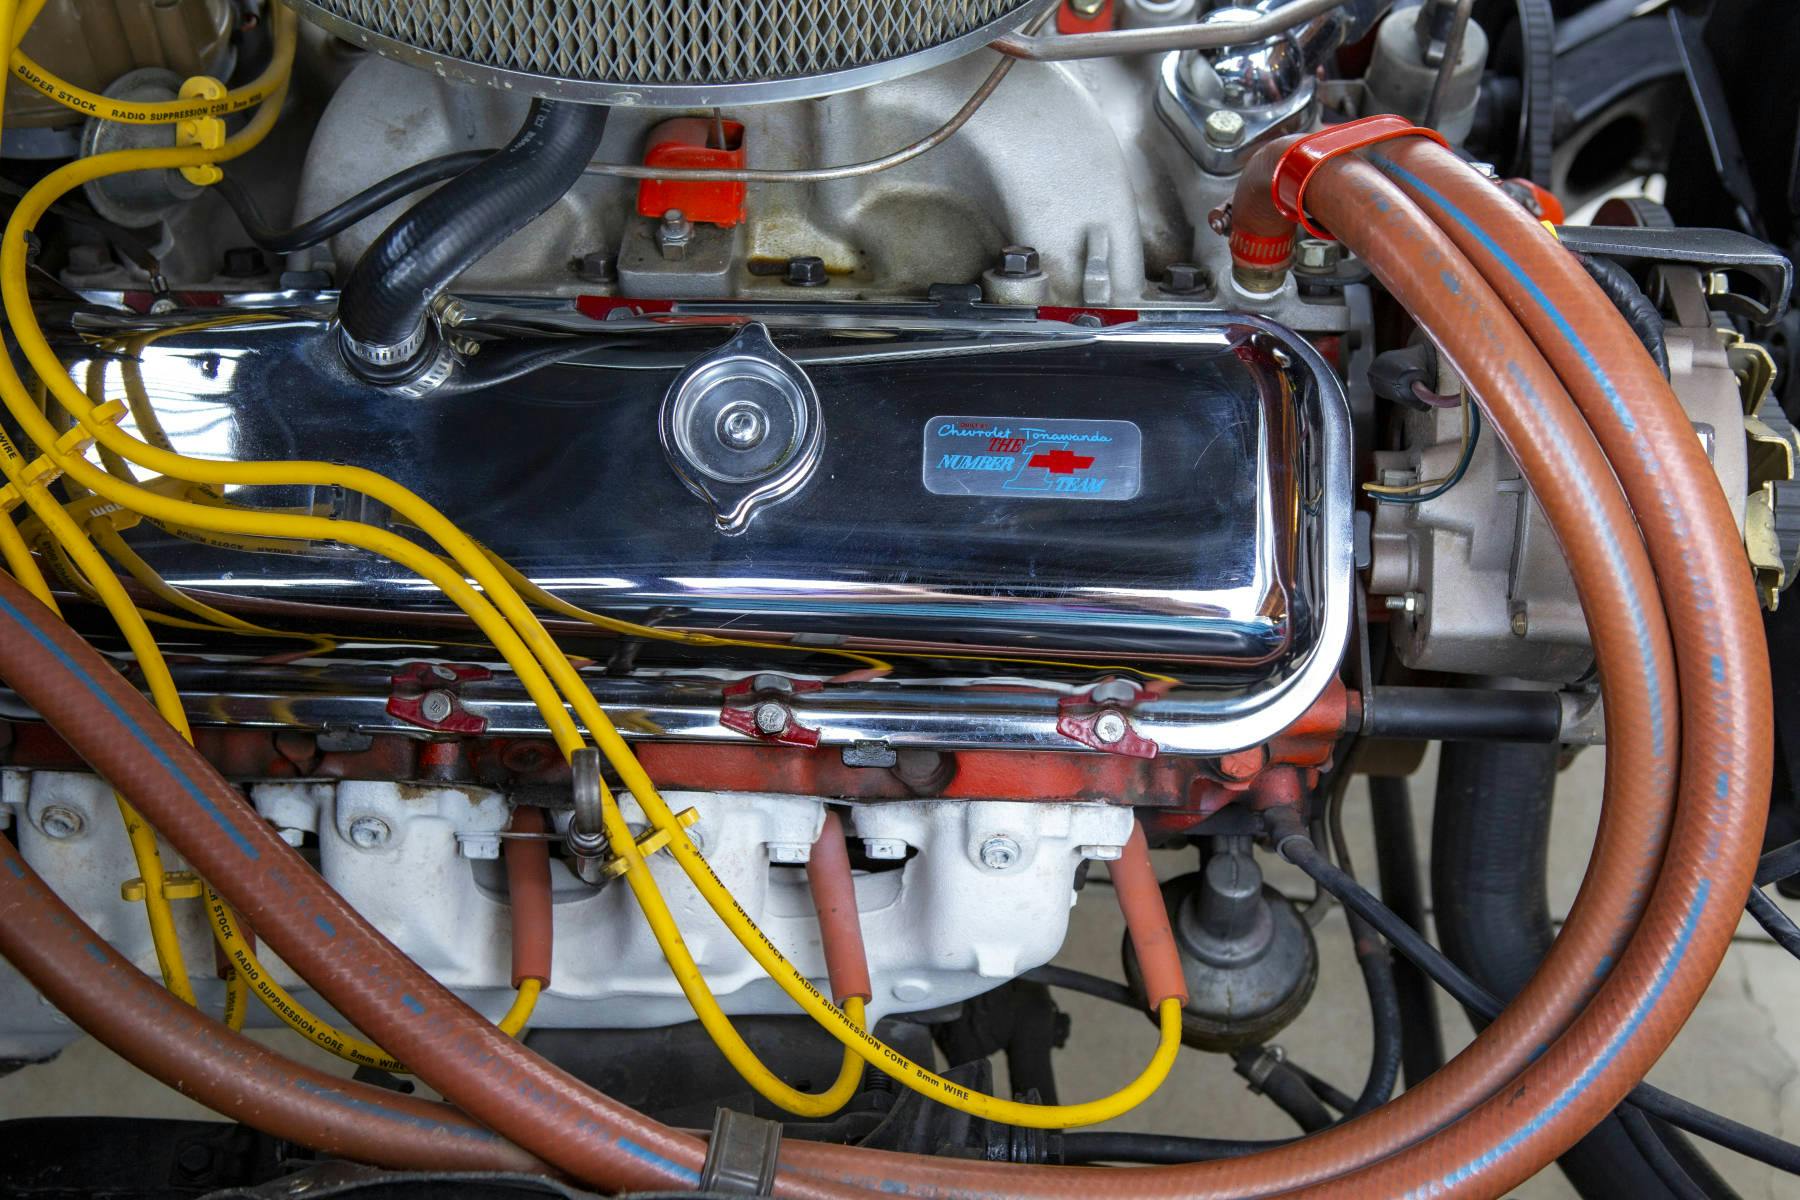 1969 Chevrolet Chevelle Malibu SS 396 engine cover detail